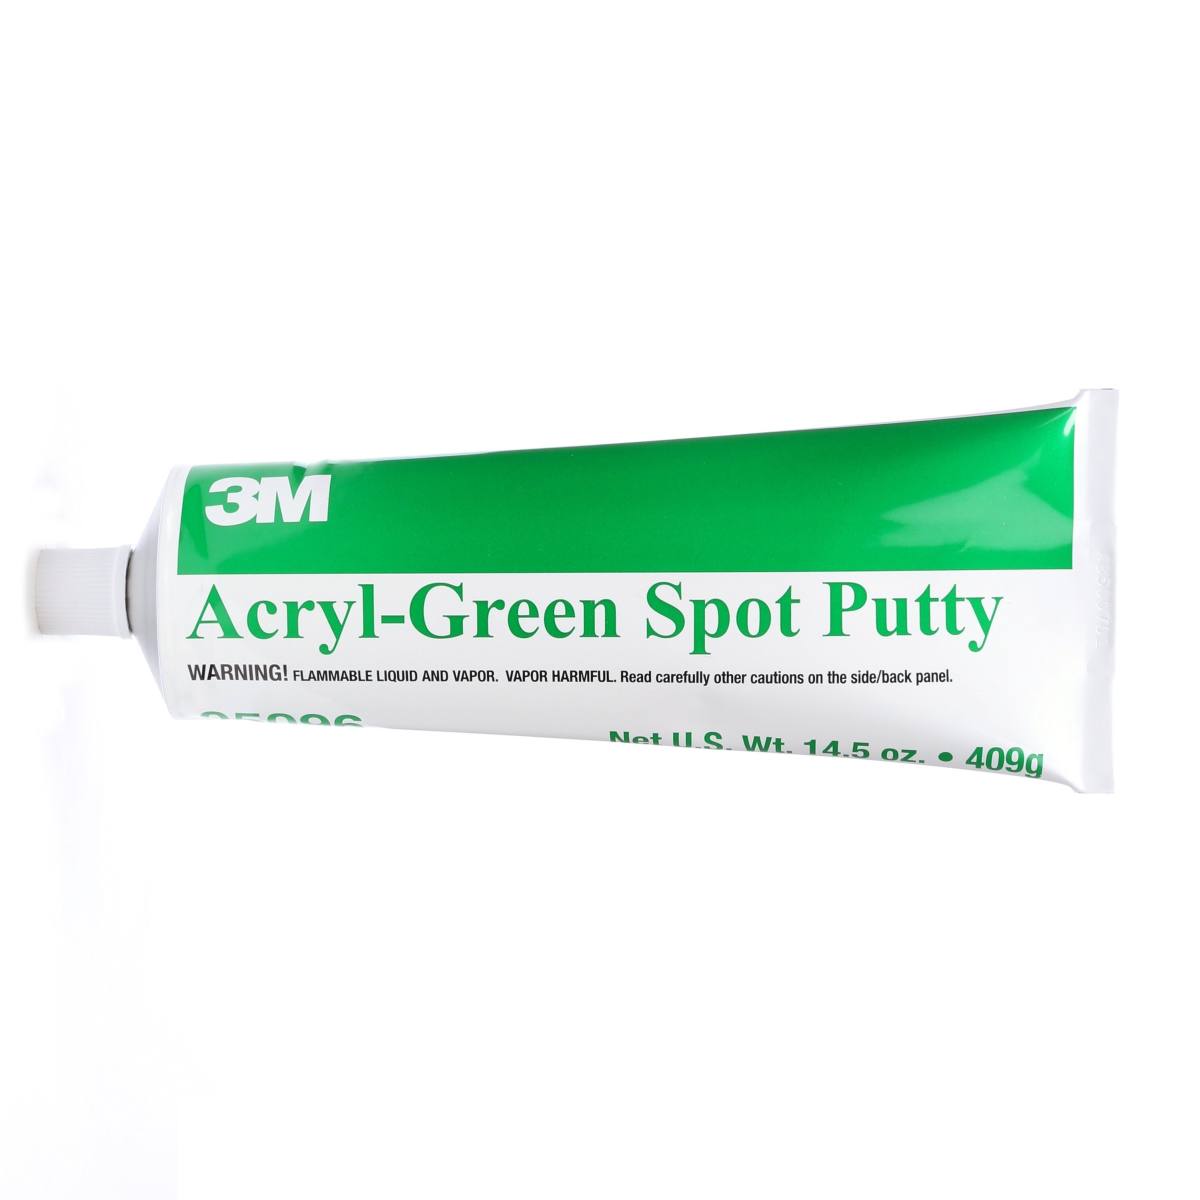 3M Acryl-Green Spot Putty, 409g